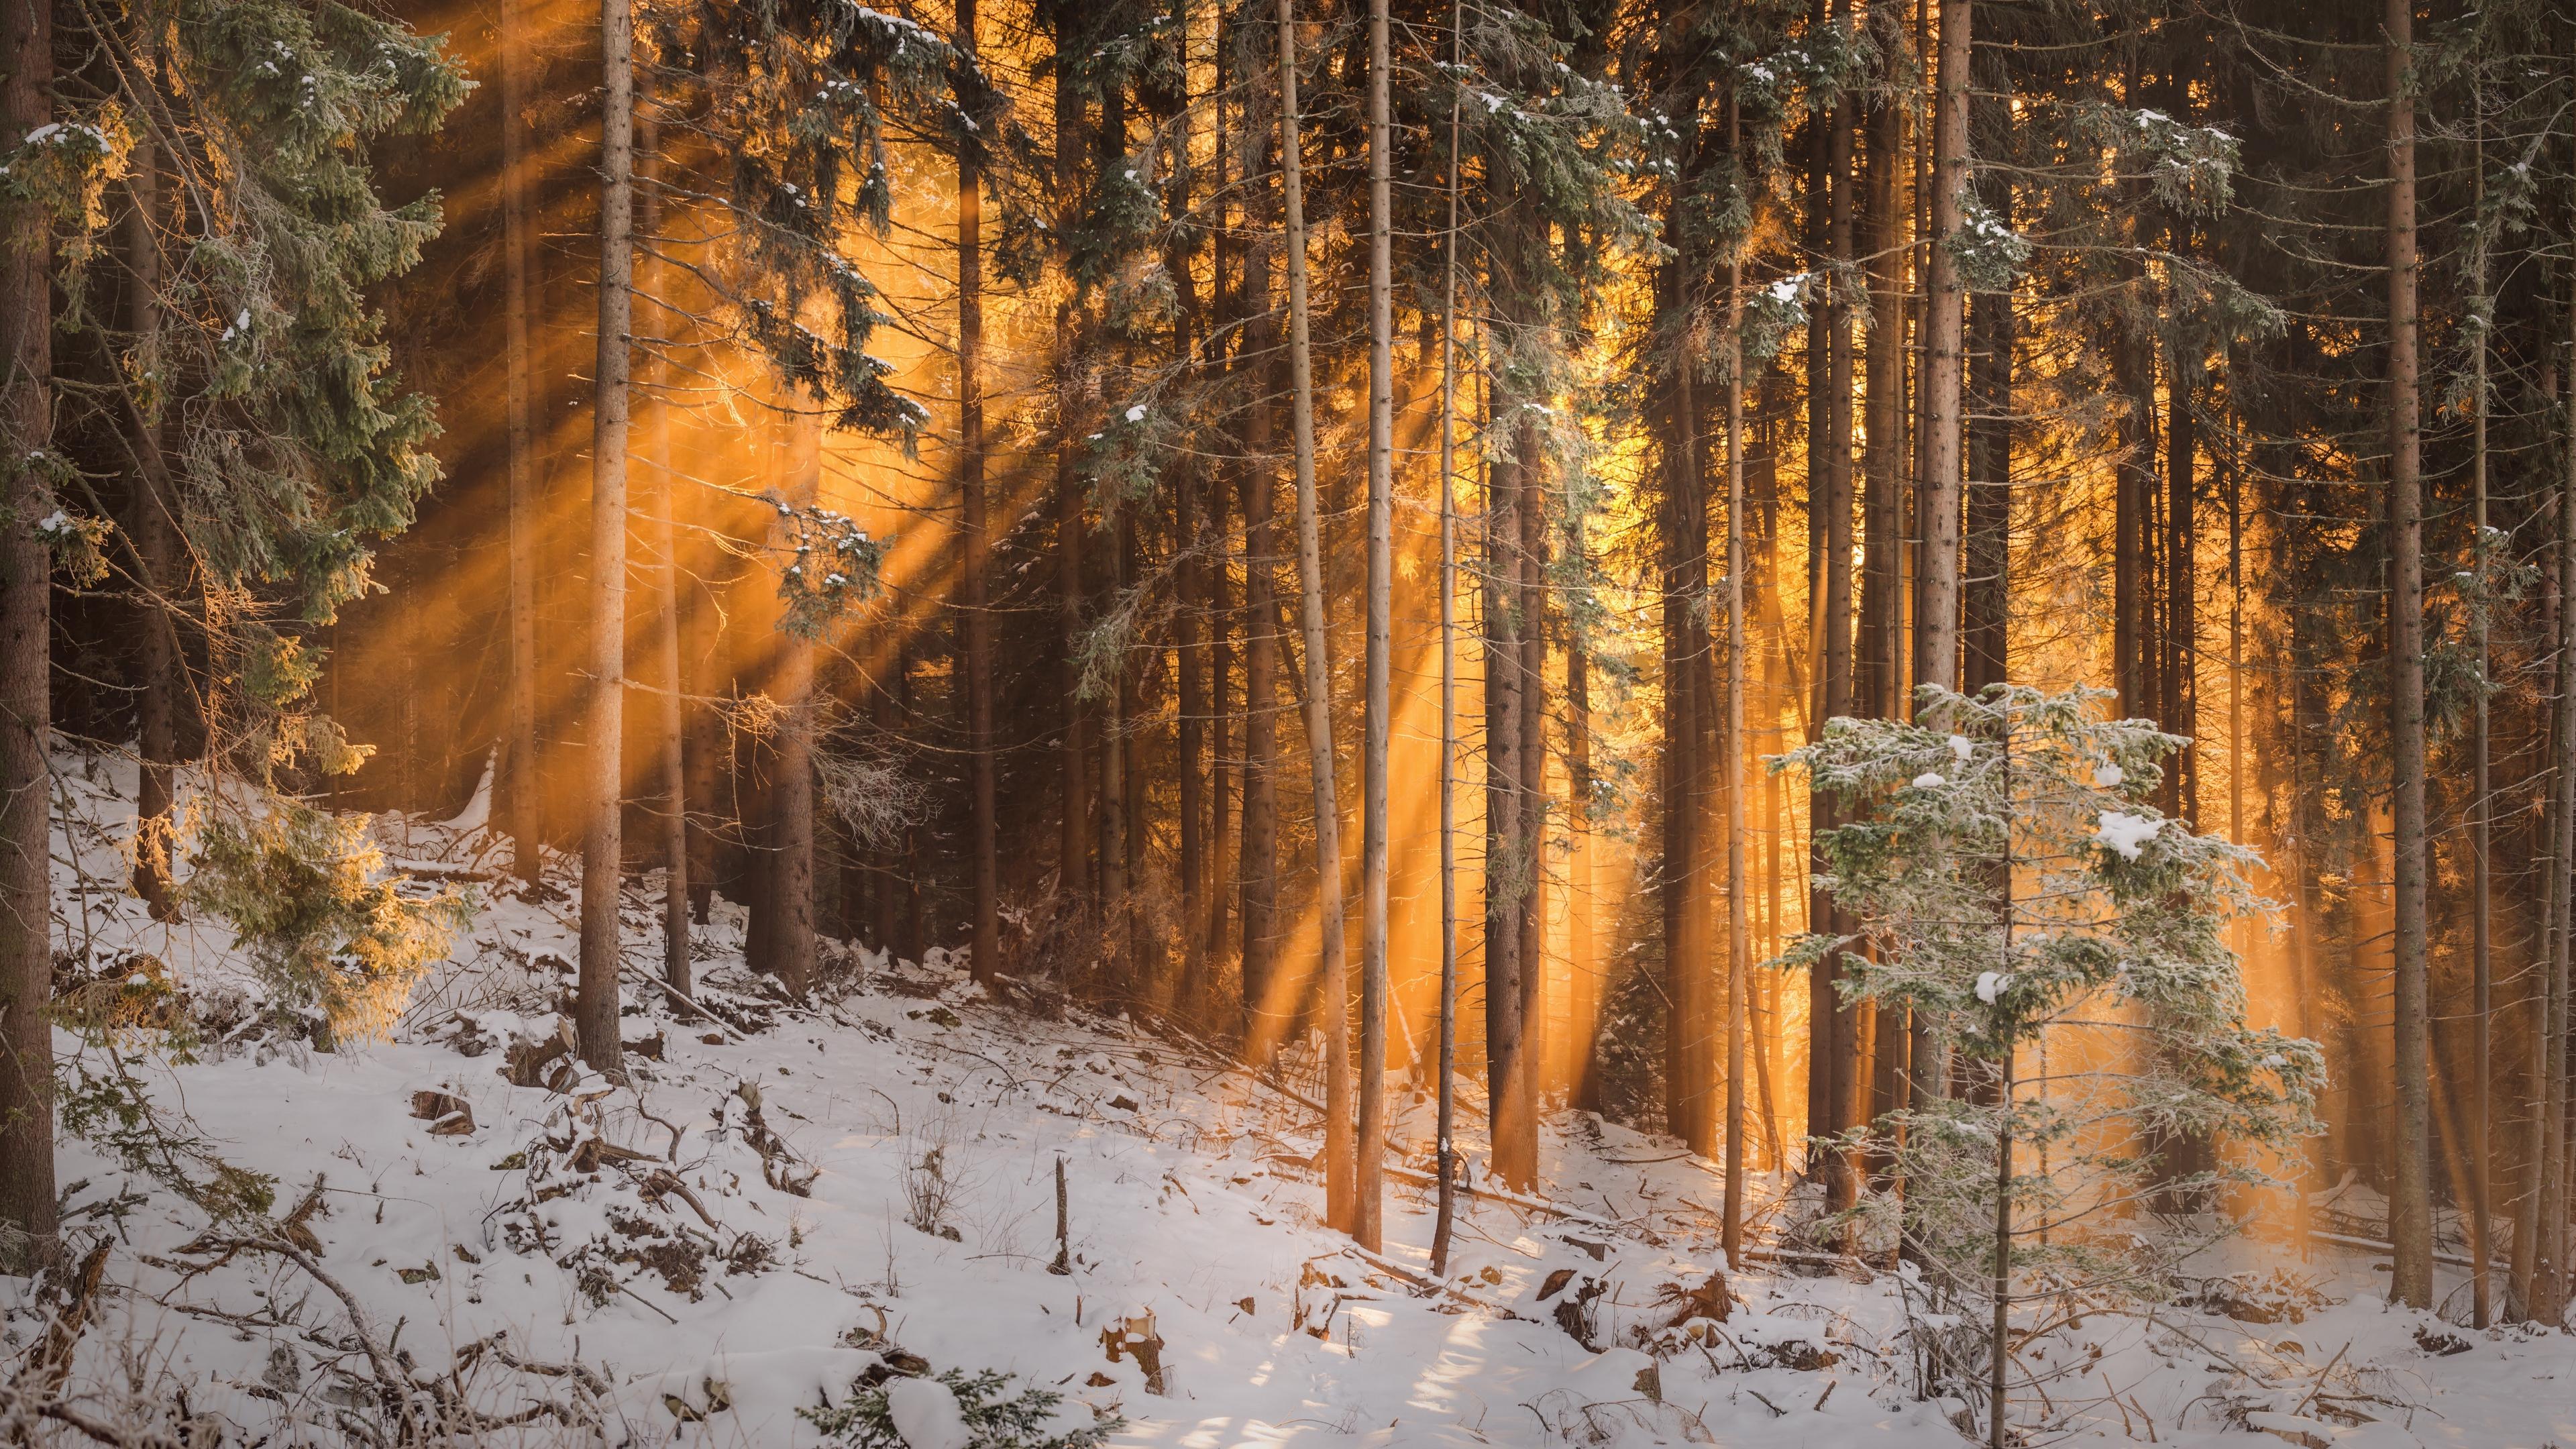 Download wallpaper 3840x2160 forest, winter, trees, sunlight